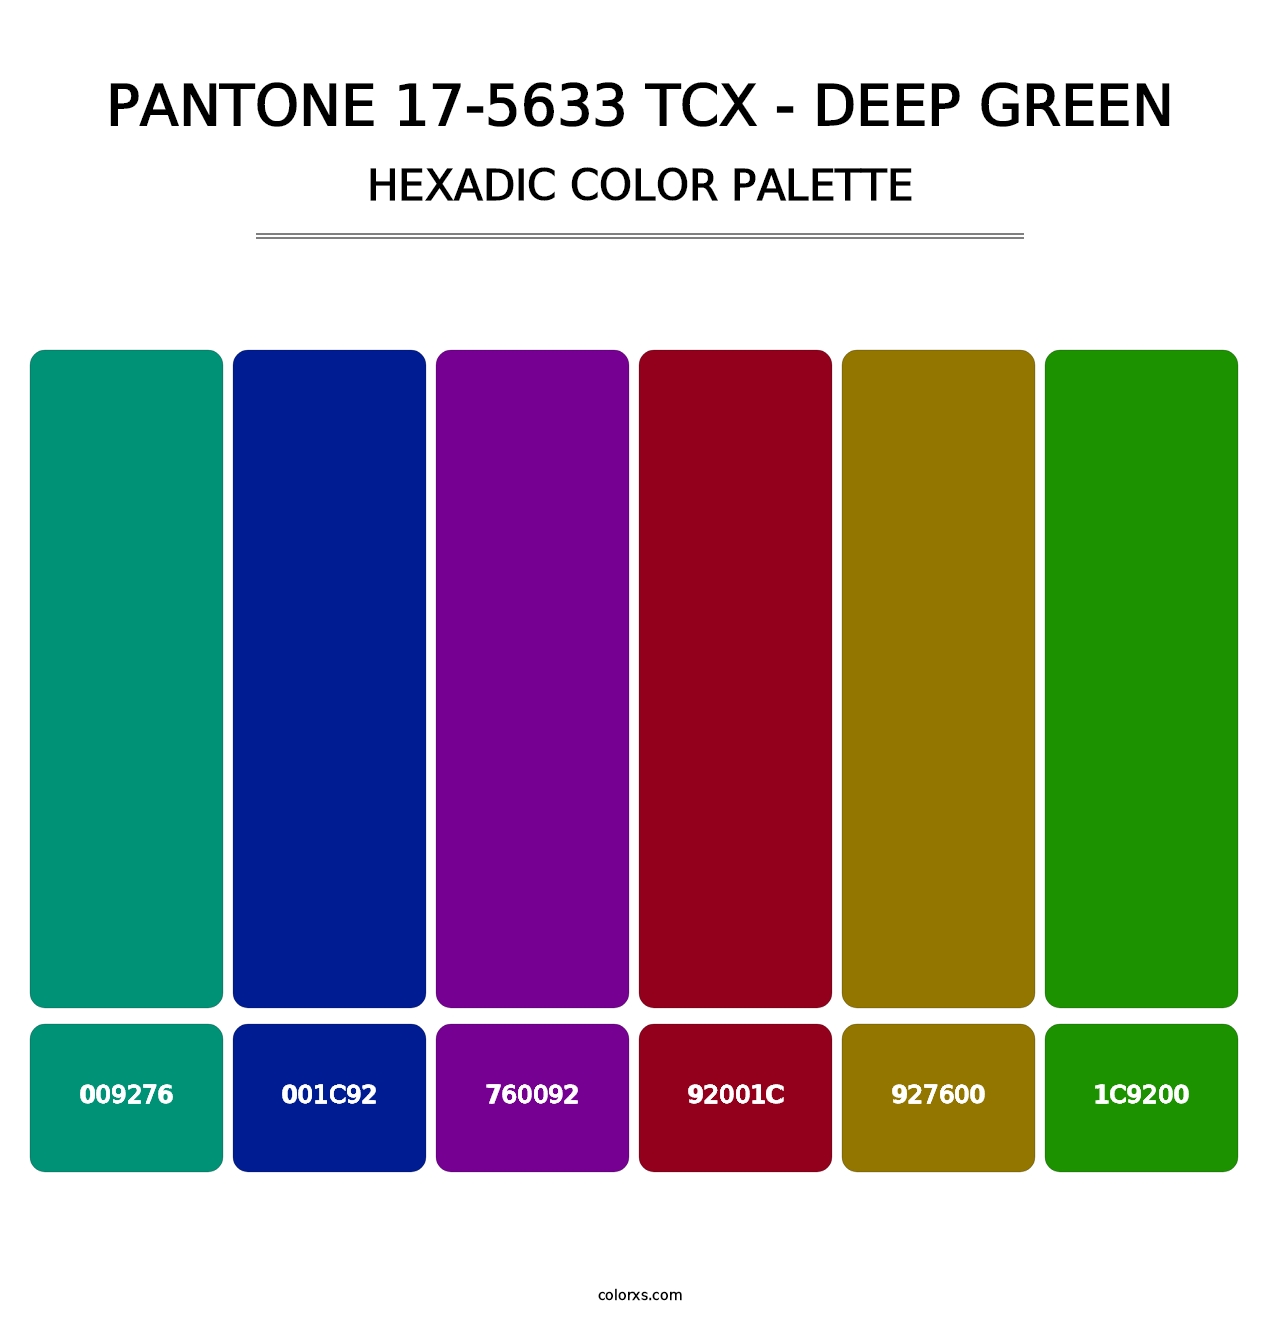 PANTONE 17-5633 TCX - Deep Green - Hexadic Color Palette